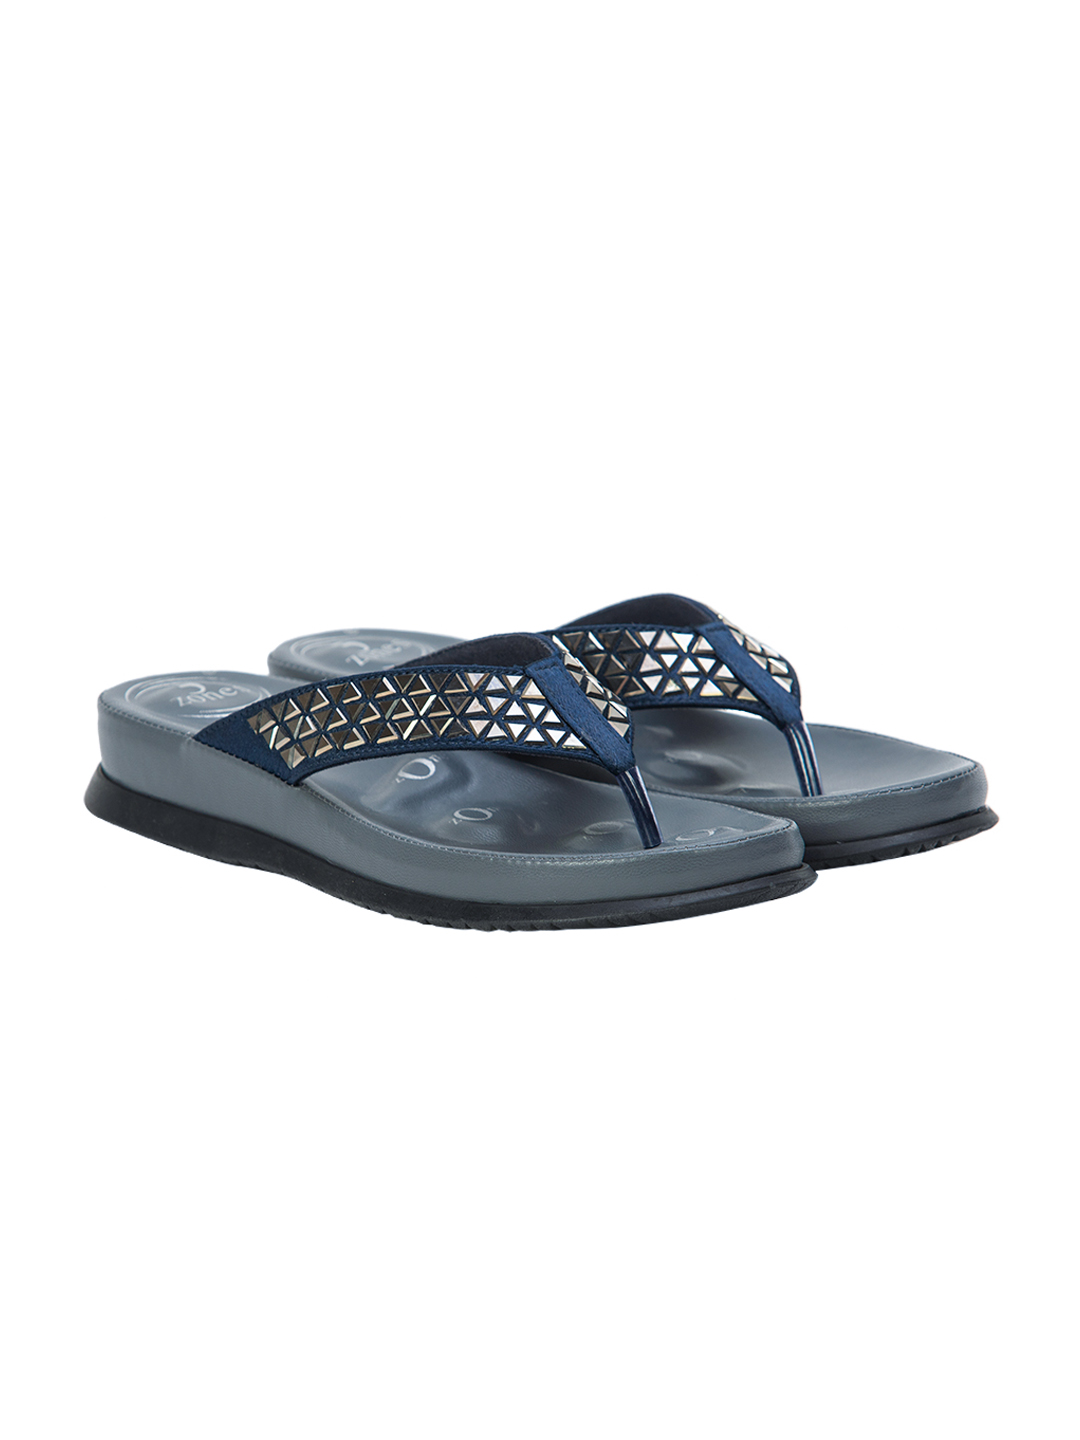 Buy Von Wellx Germany Comfort Beam Blue Slippers Online in Kochi